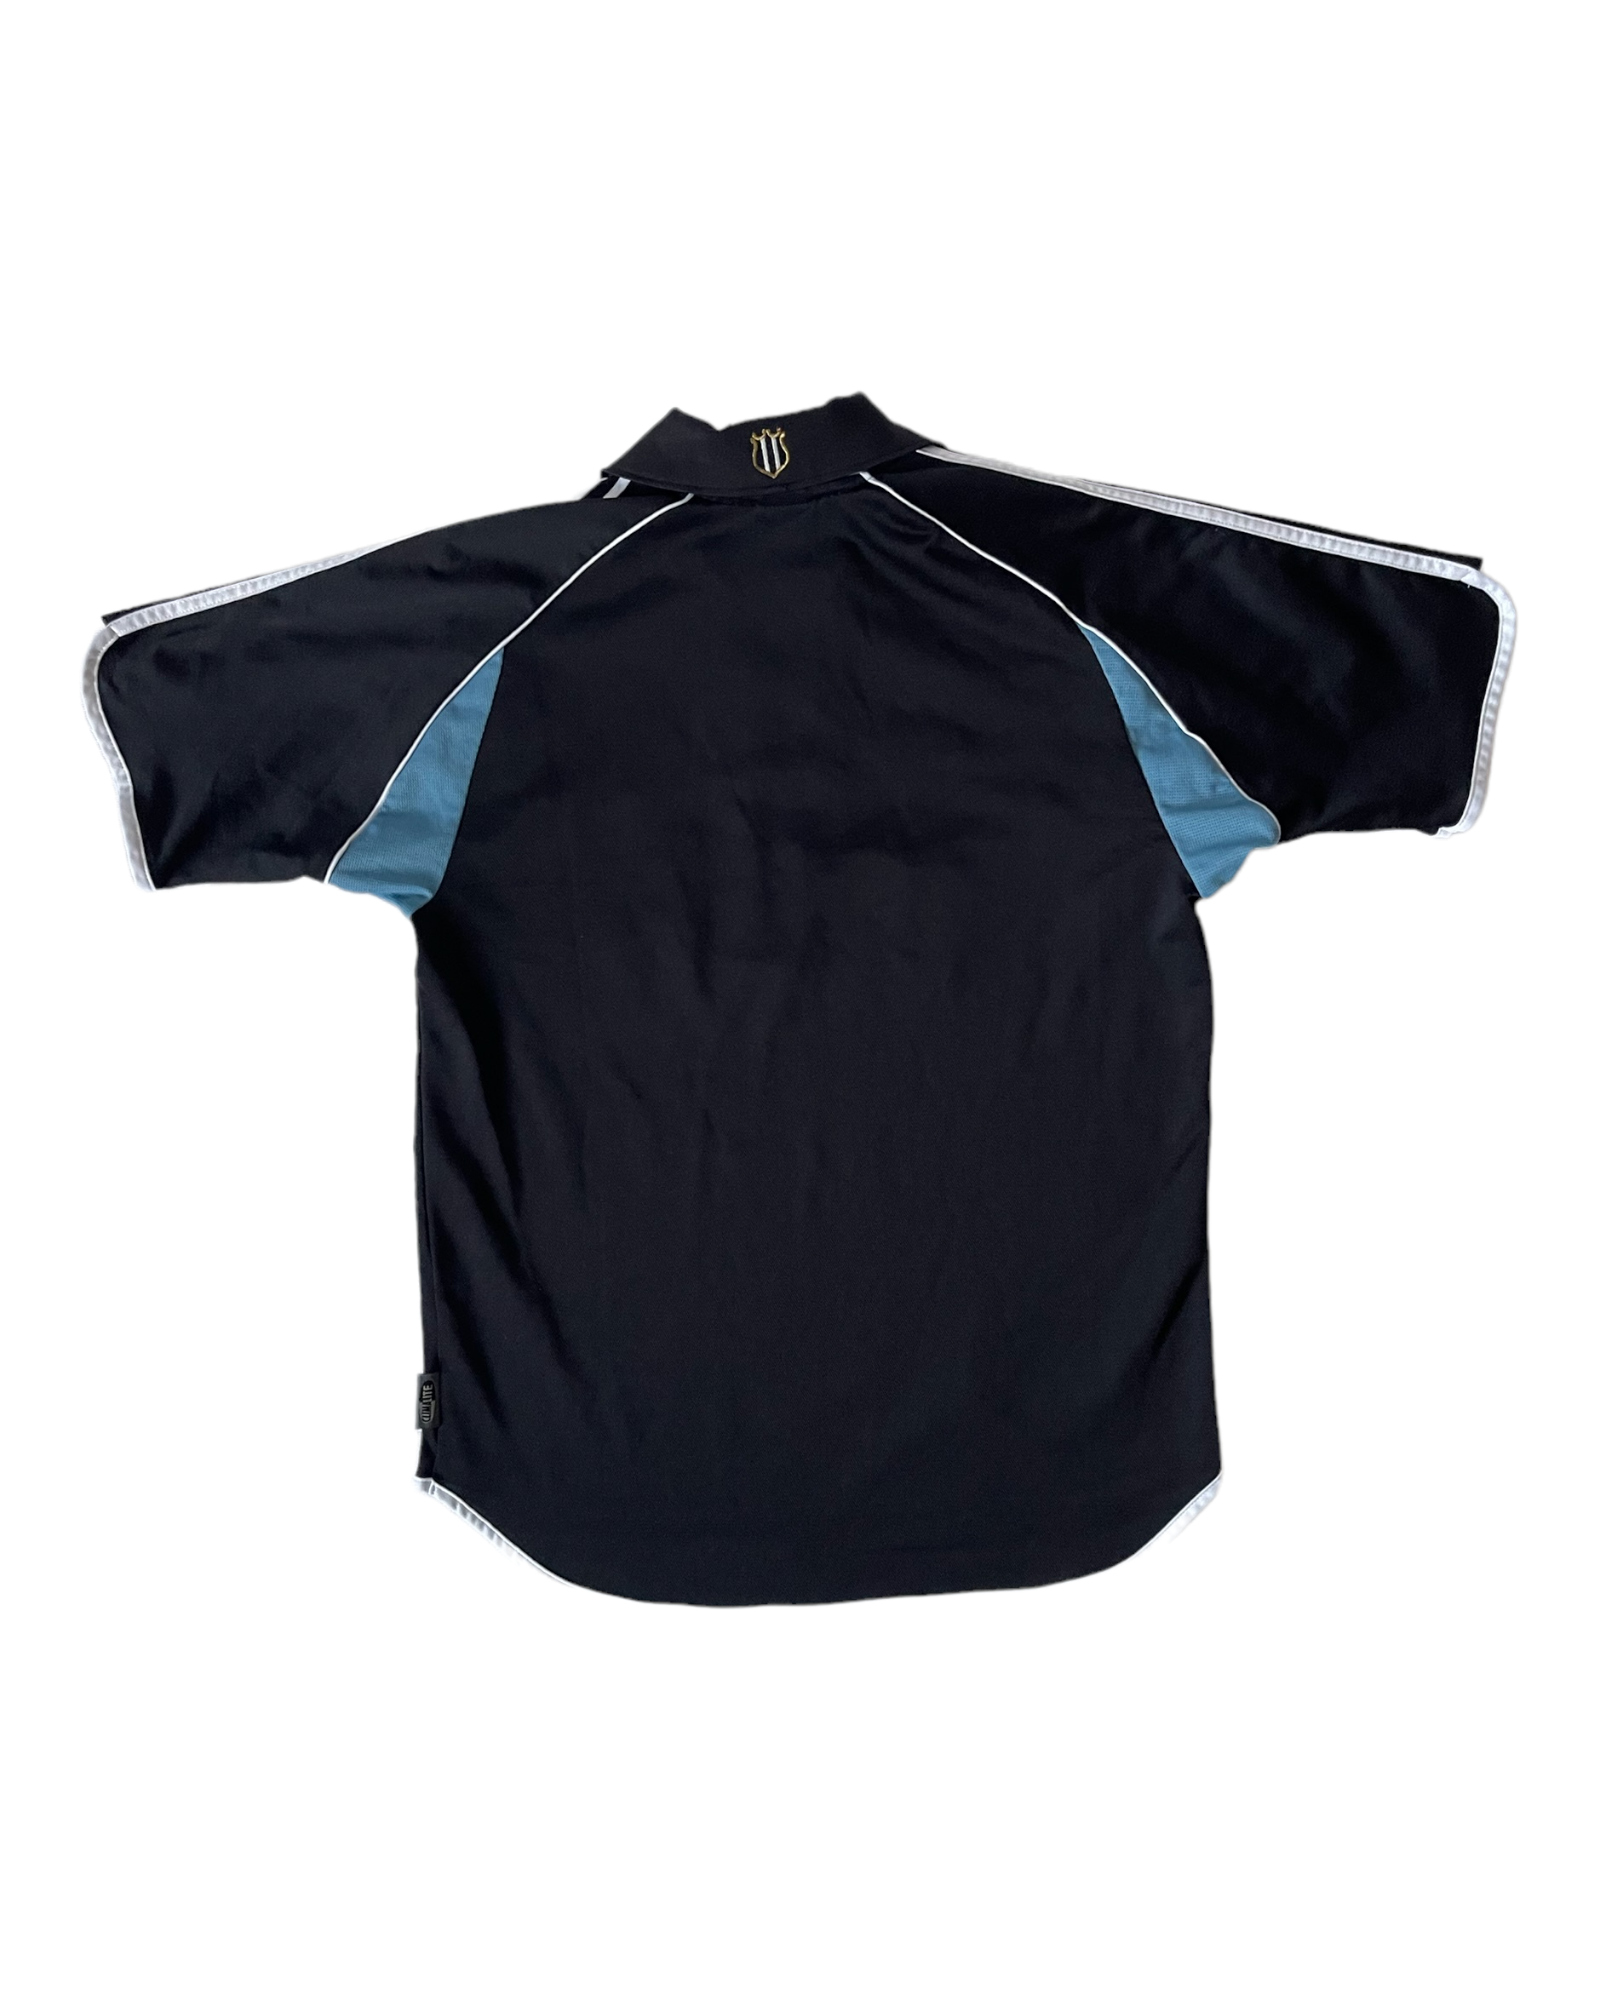 Newcastle United Adidas 2000-2001 Away Football Shirt Black NTL Size M Made in UK